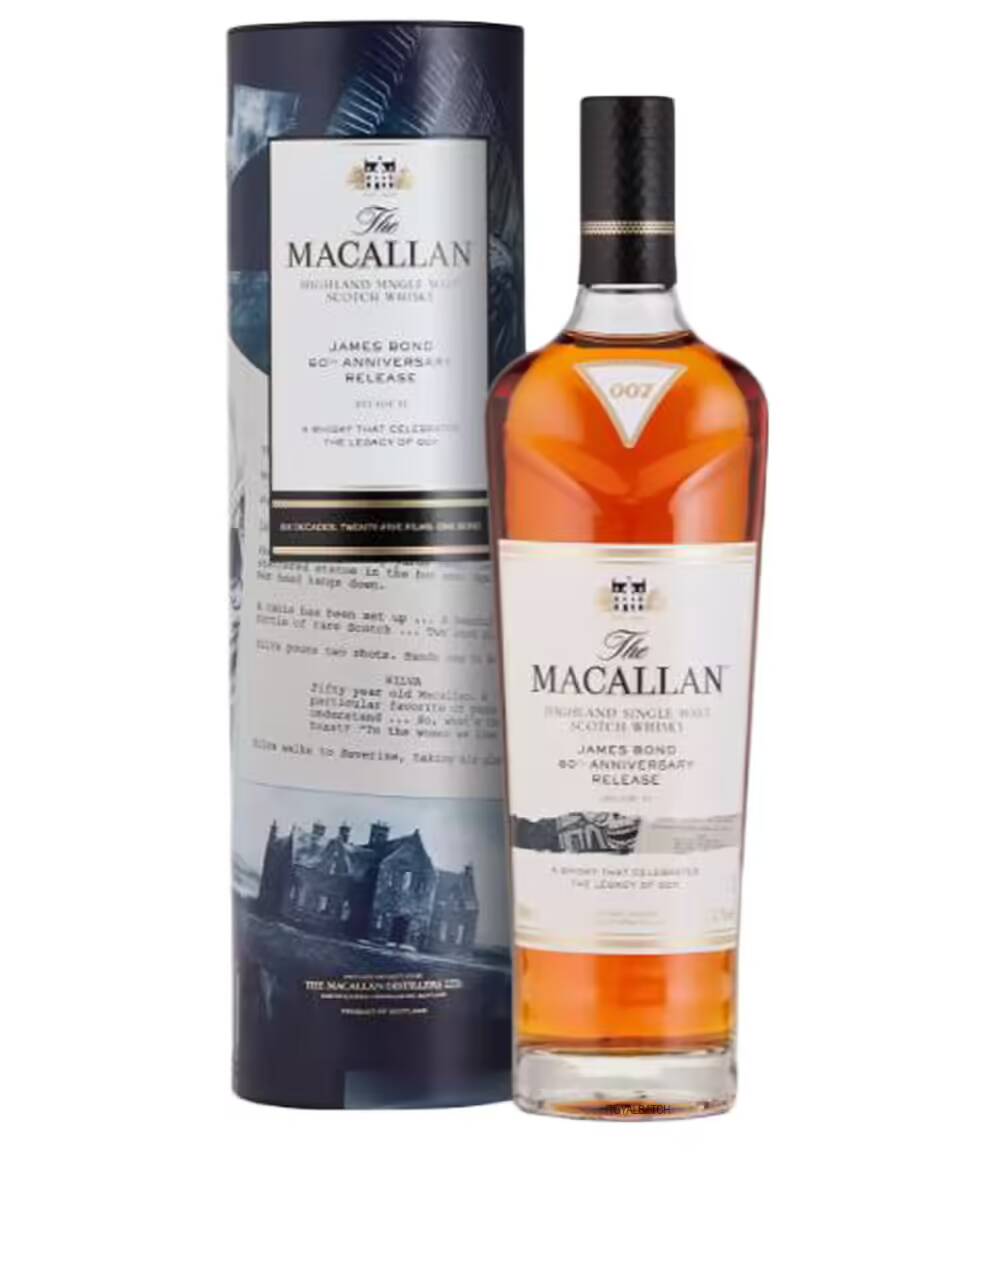 The Macallan James Bond 60th Anniversary Release Decade VI Scotch Whisky